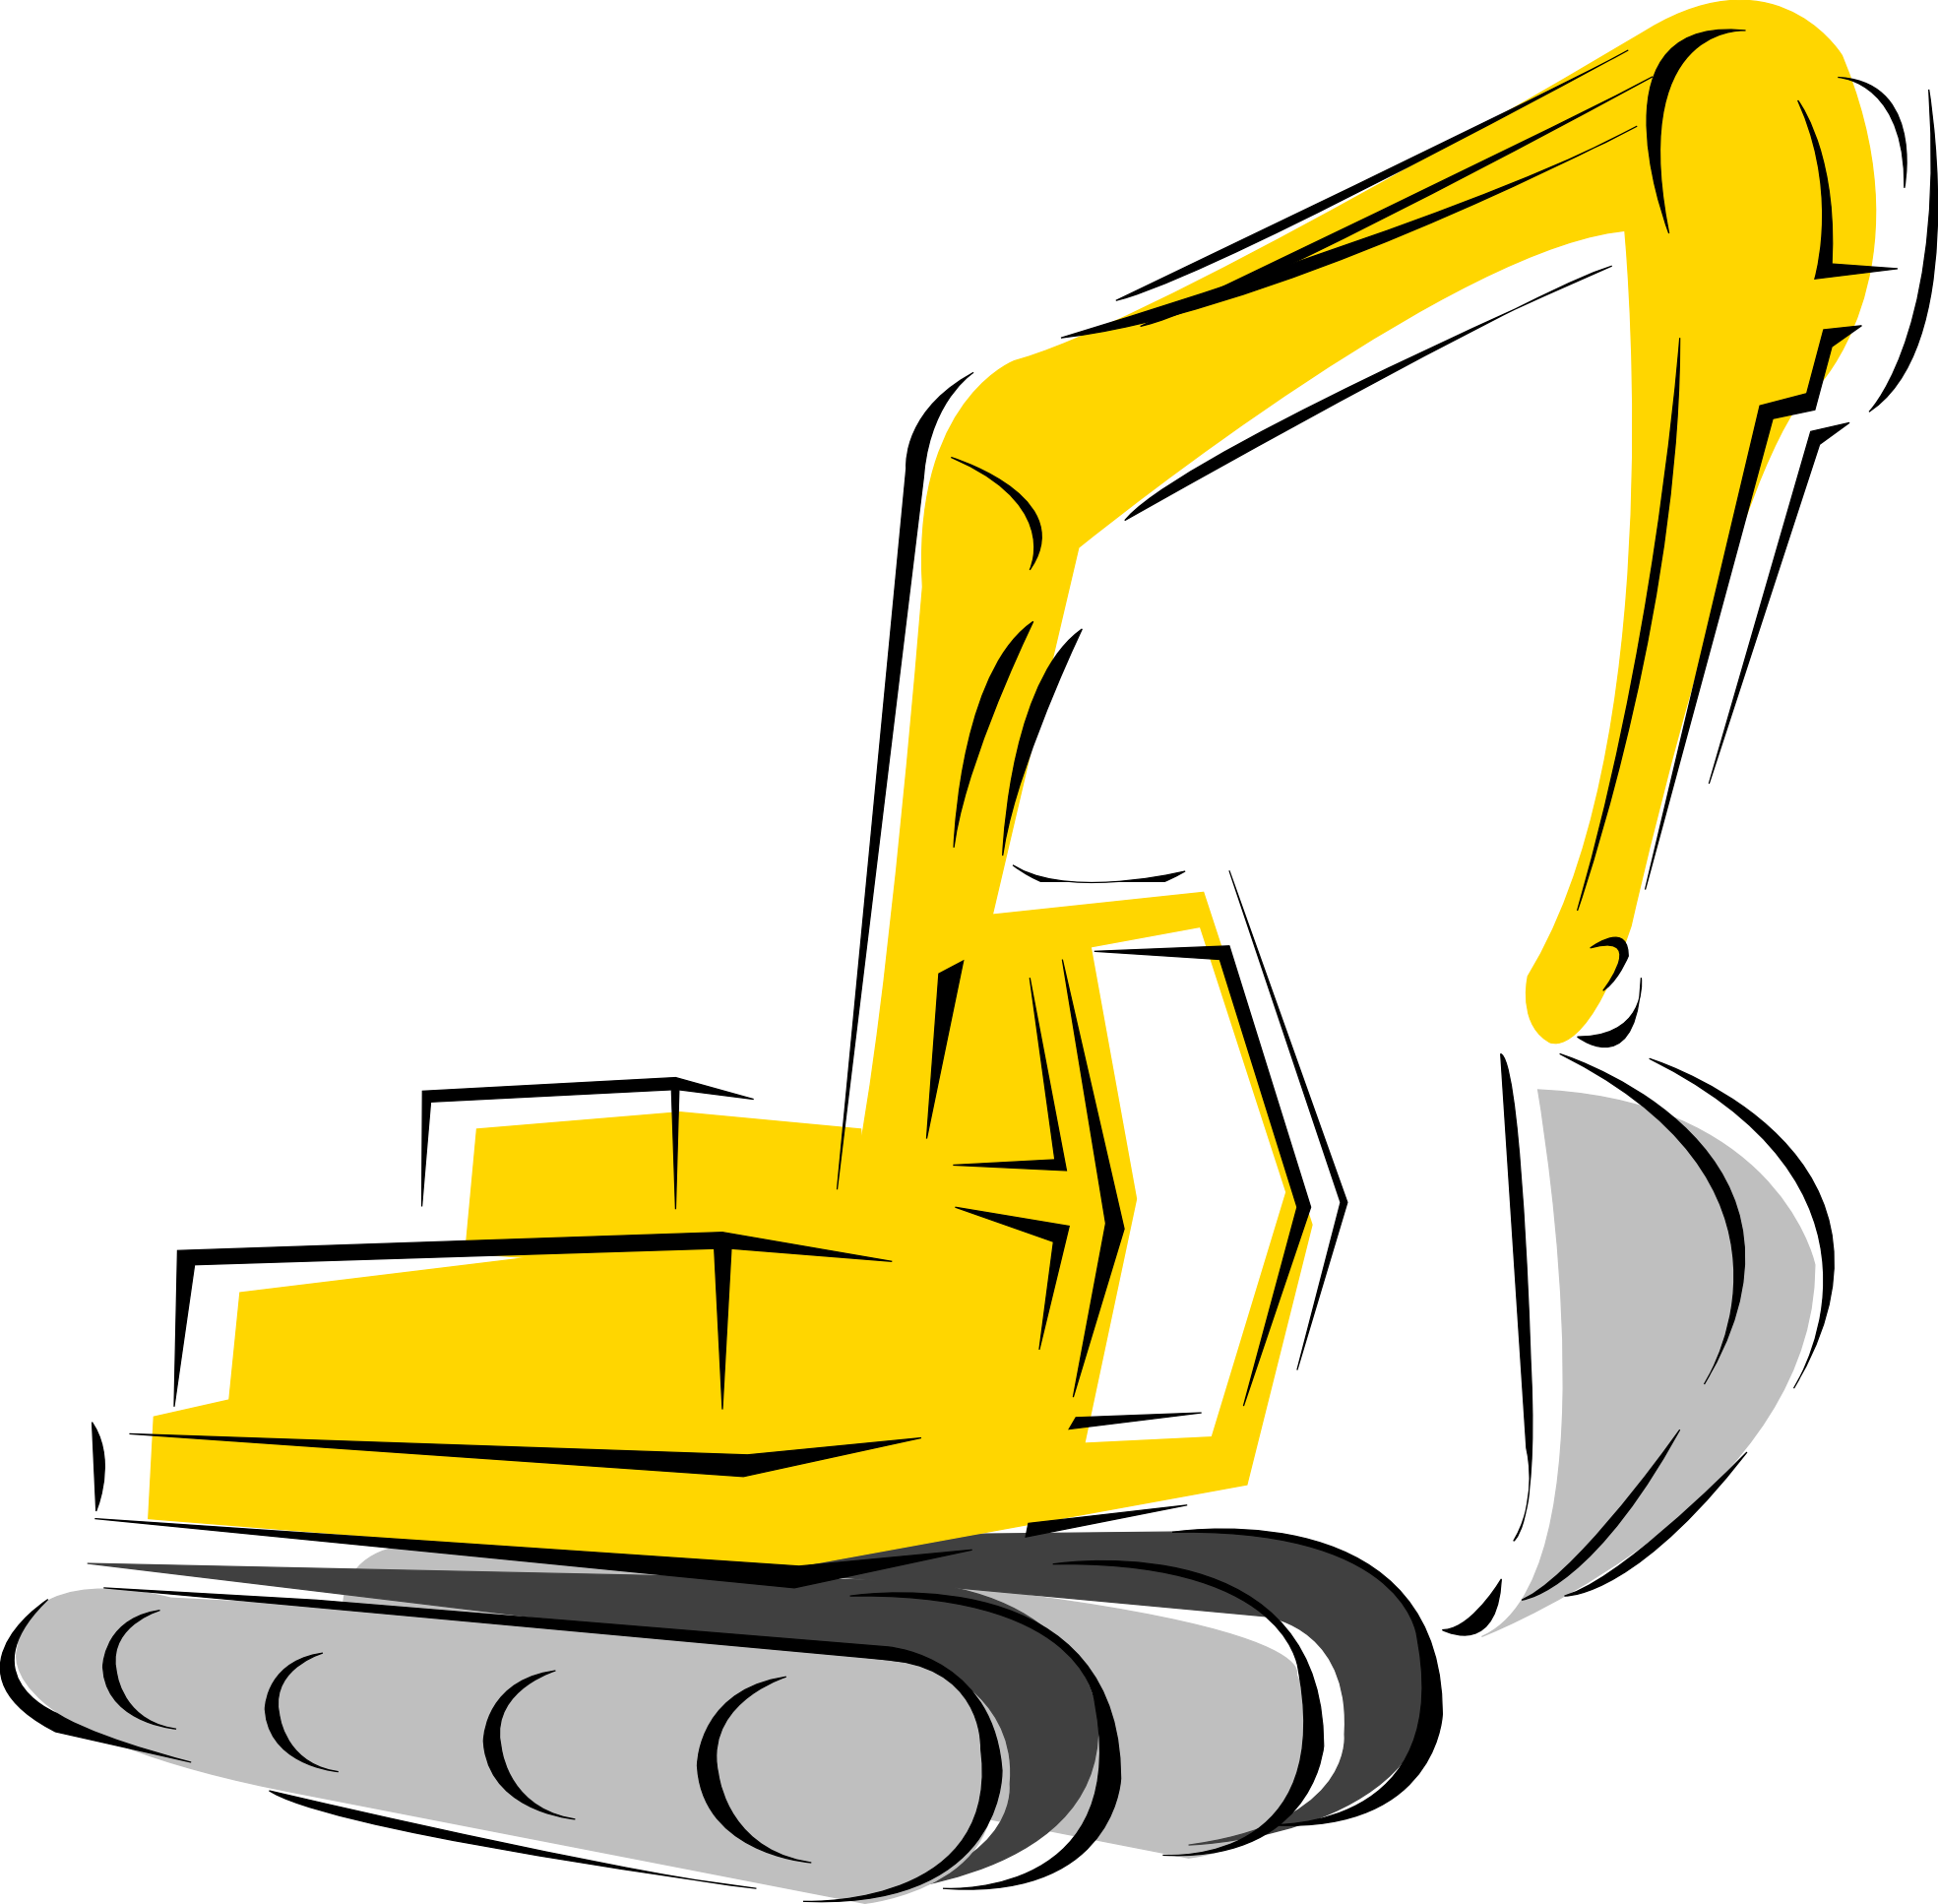 Excavator Clip Art Images Fre